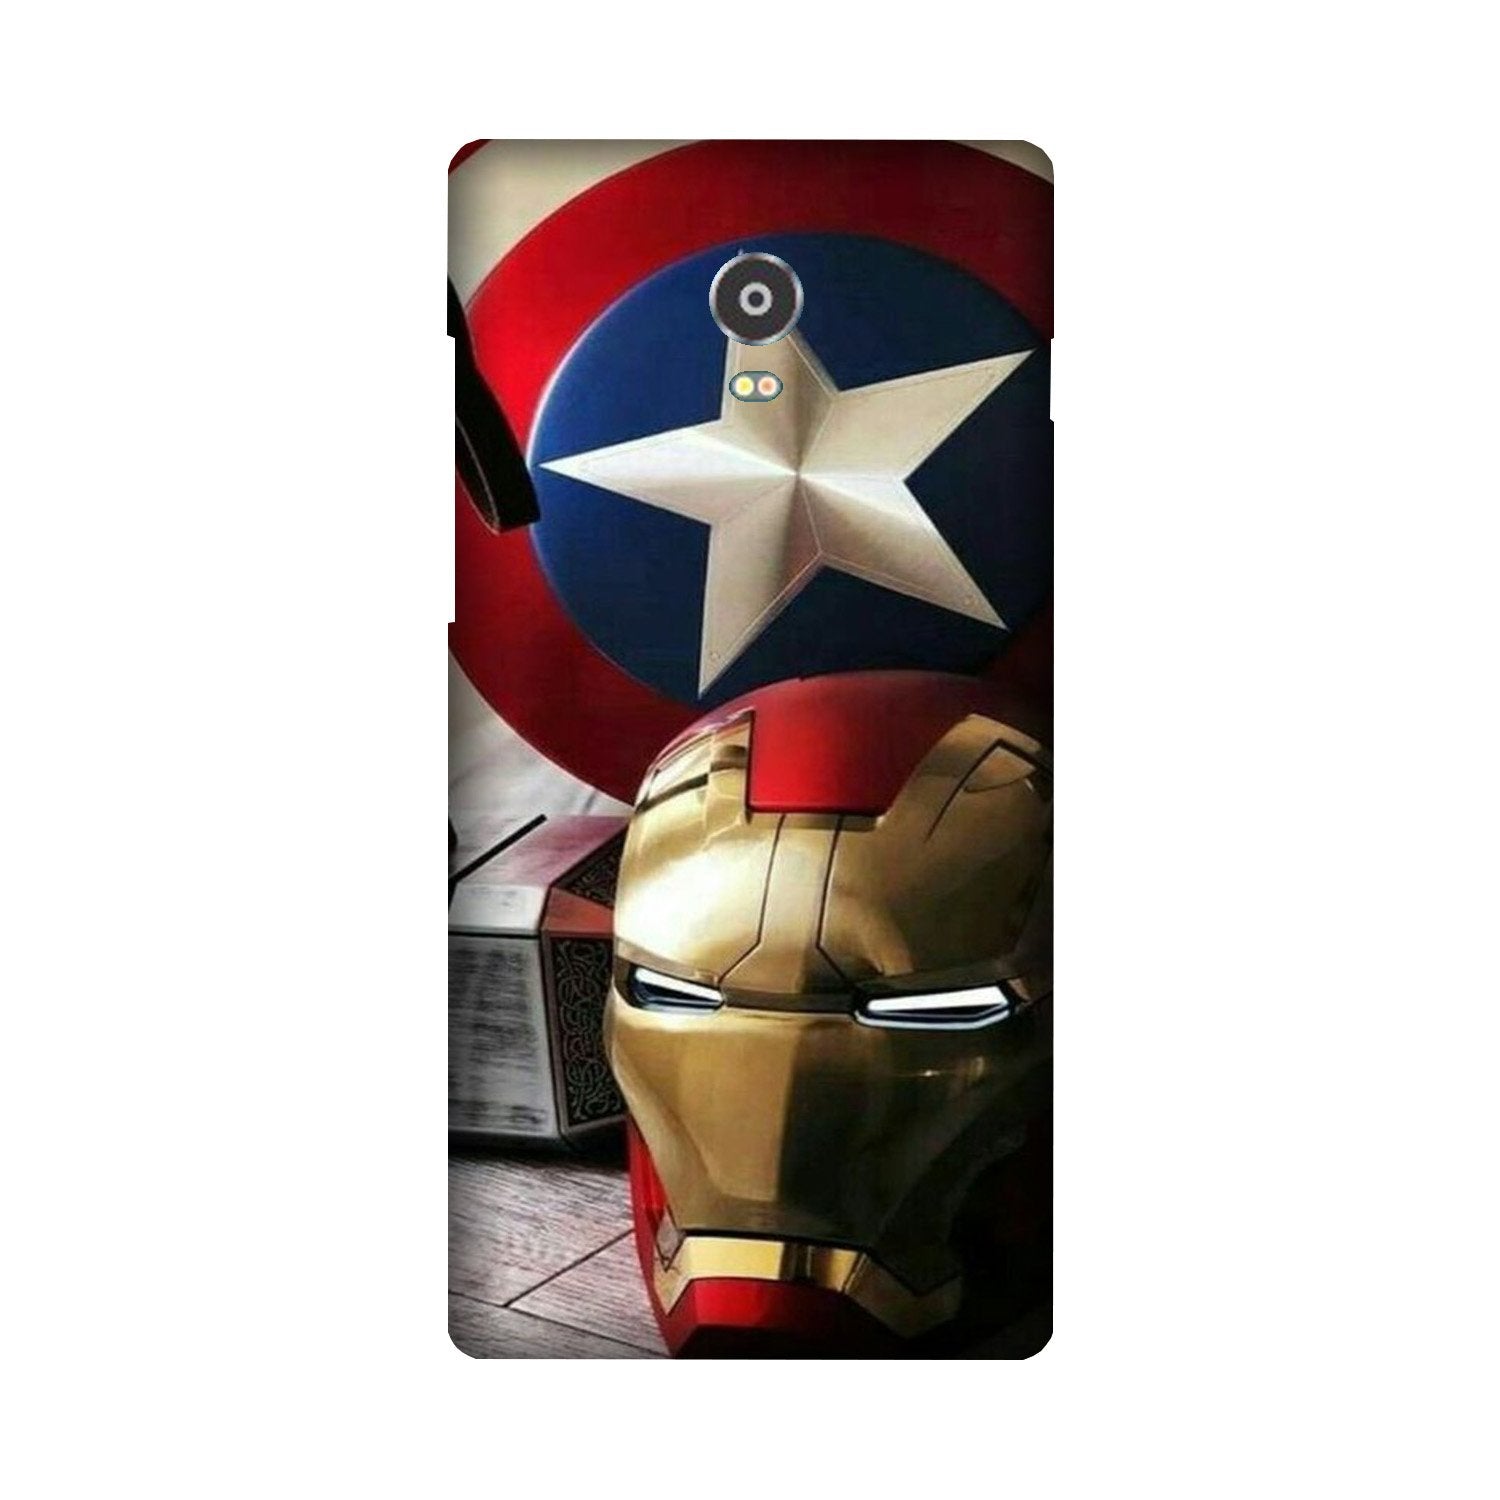 Ironman Captain America Case for Lenovo Vibe P1 (Design No. 254)